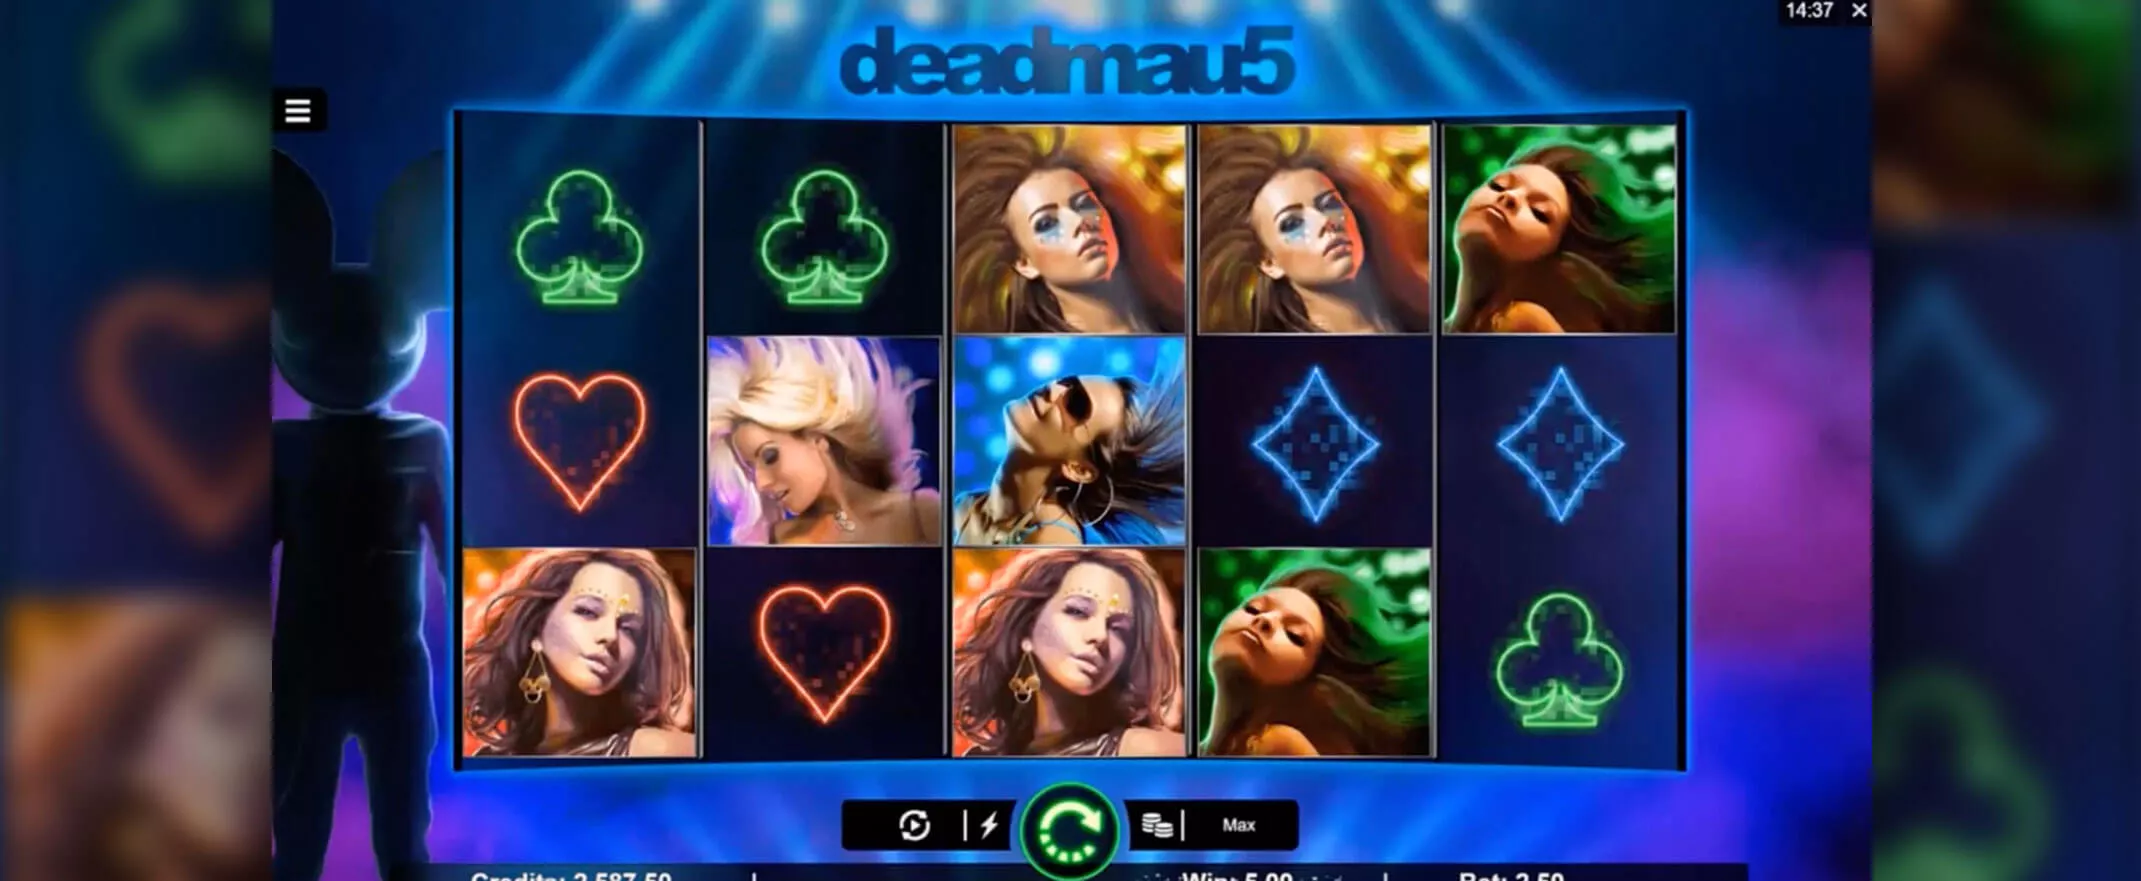 deadmau5 screenshot